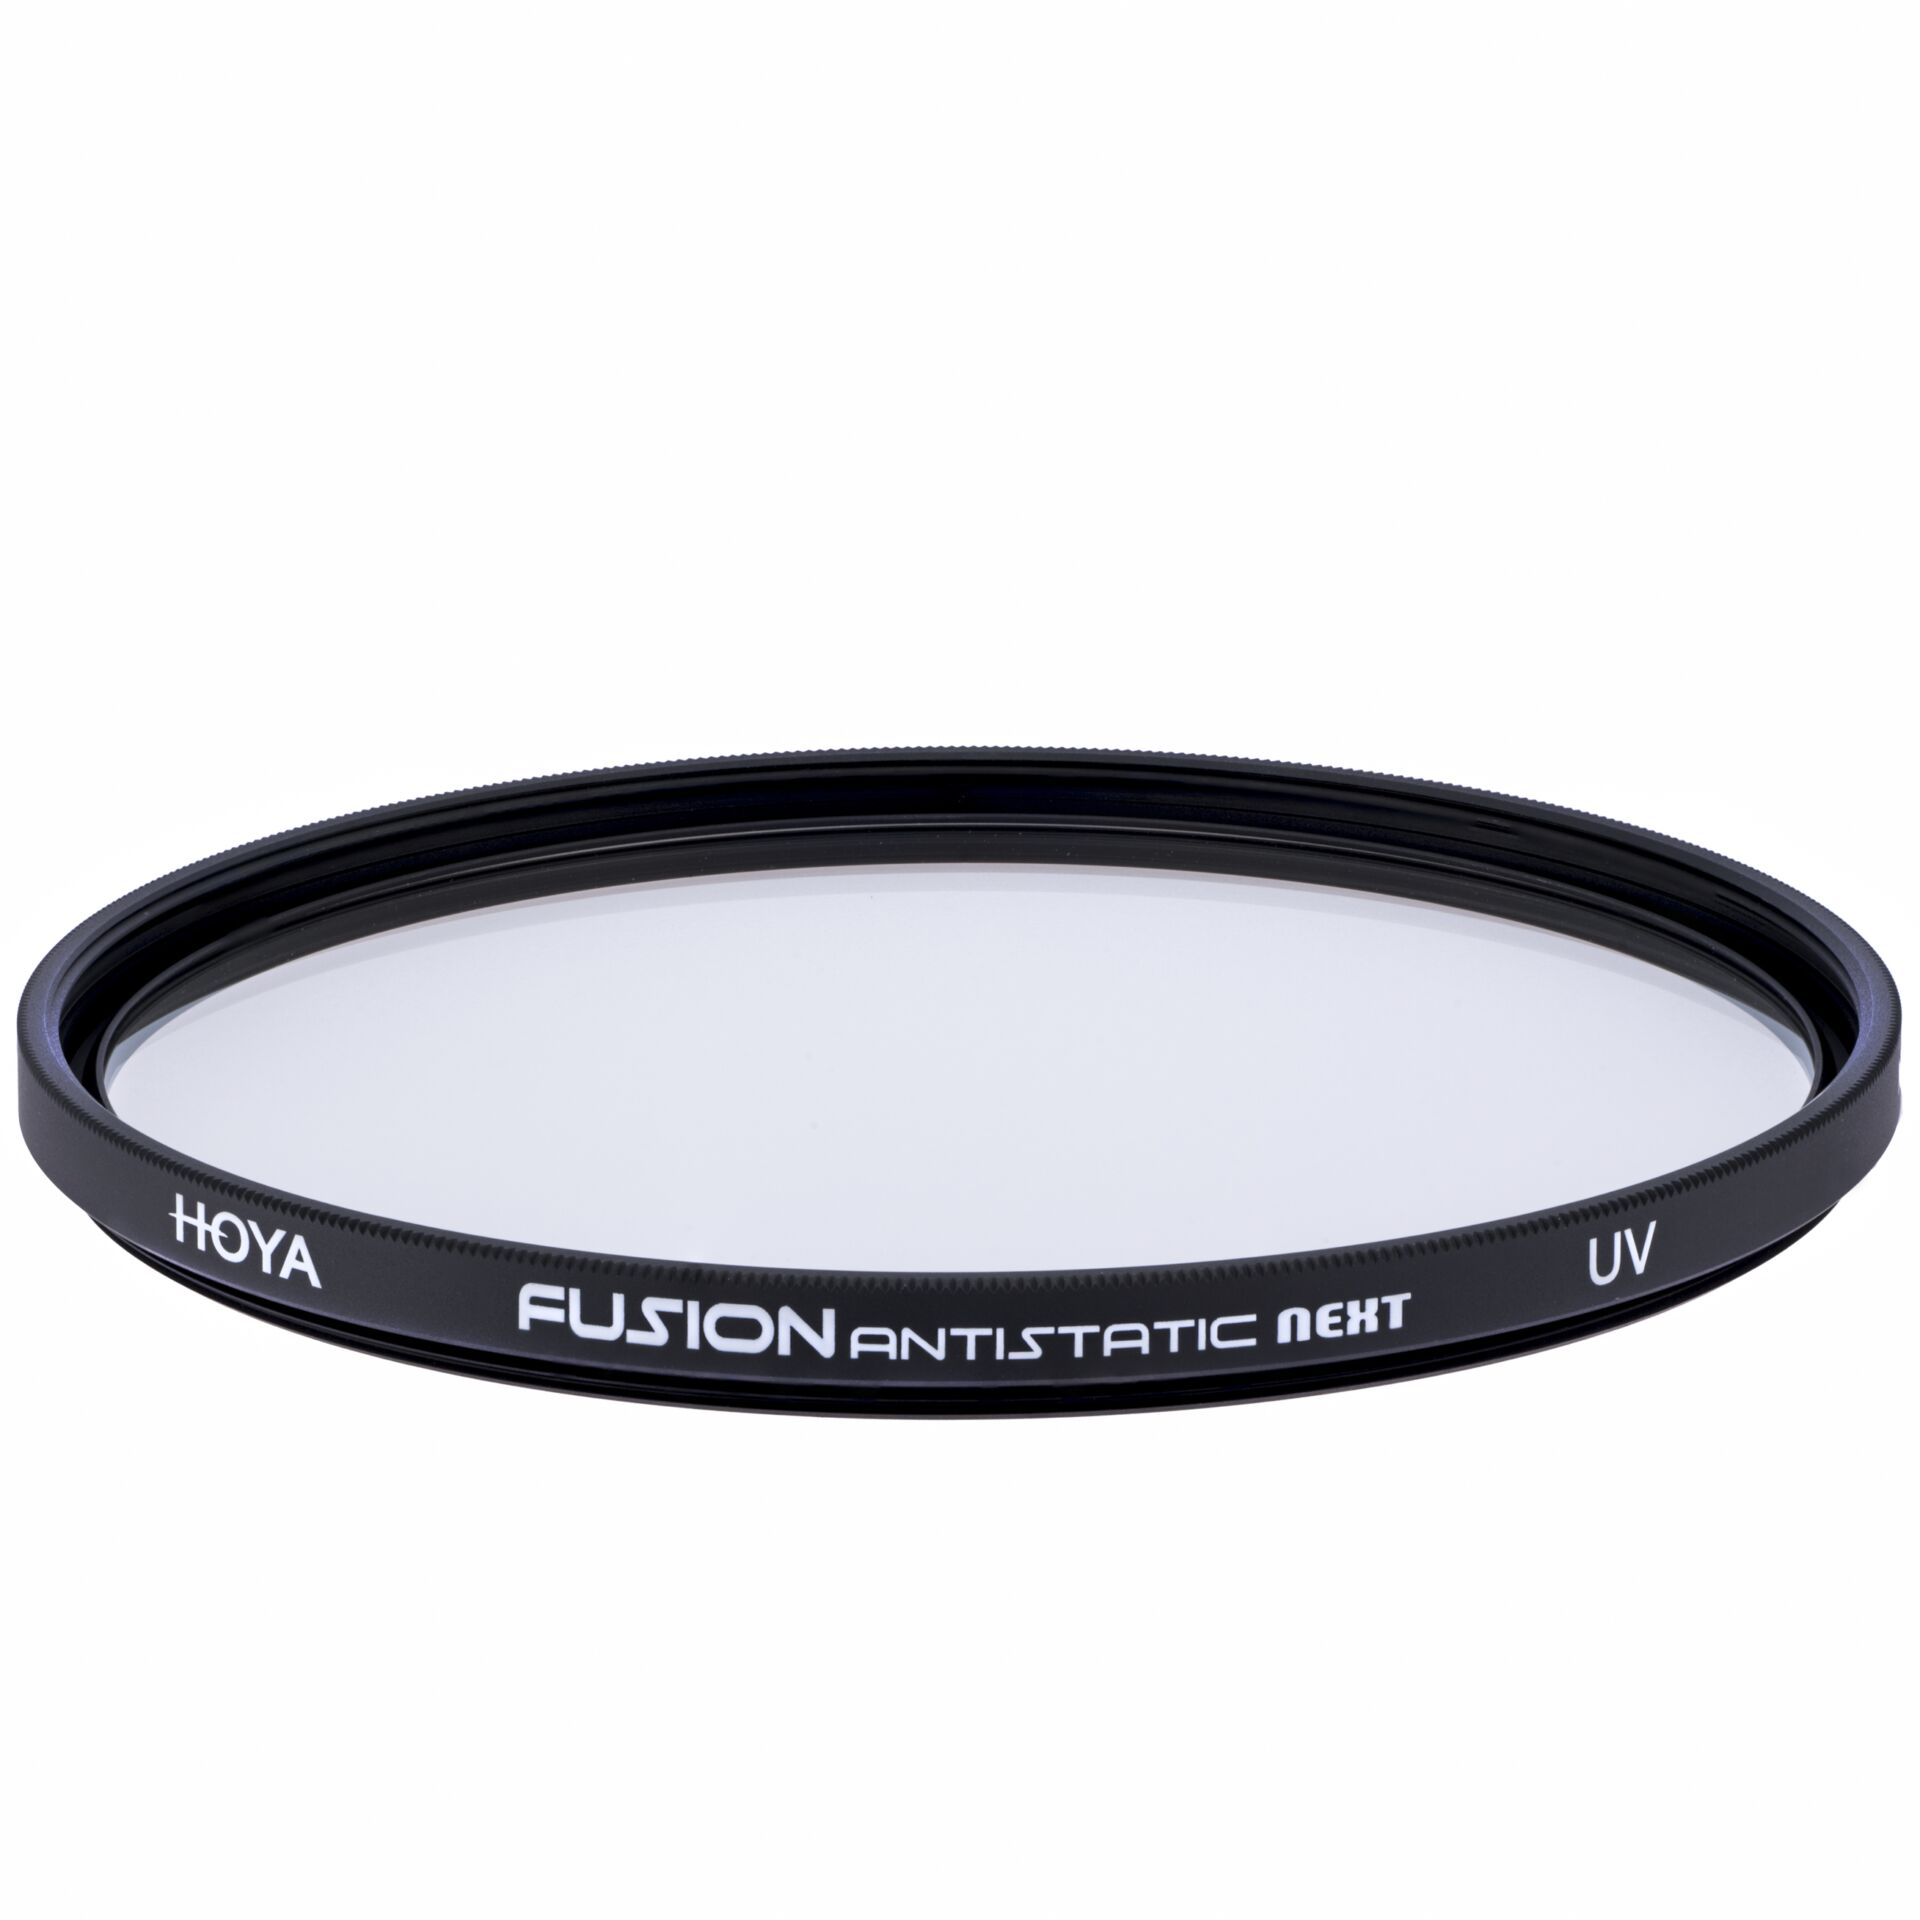 Hoya UV Fusion Antistatic NEXT 67mm